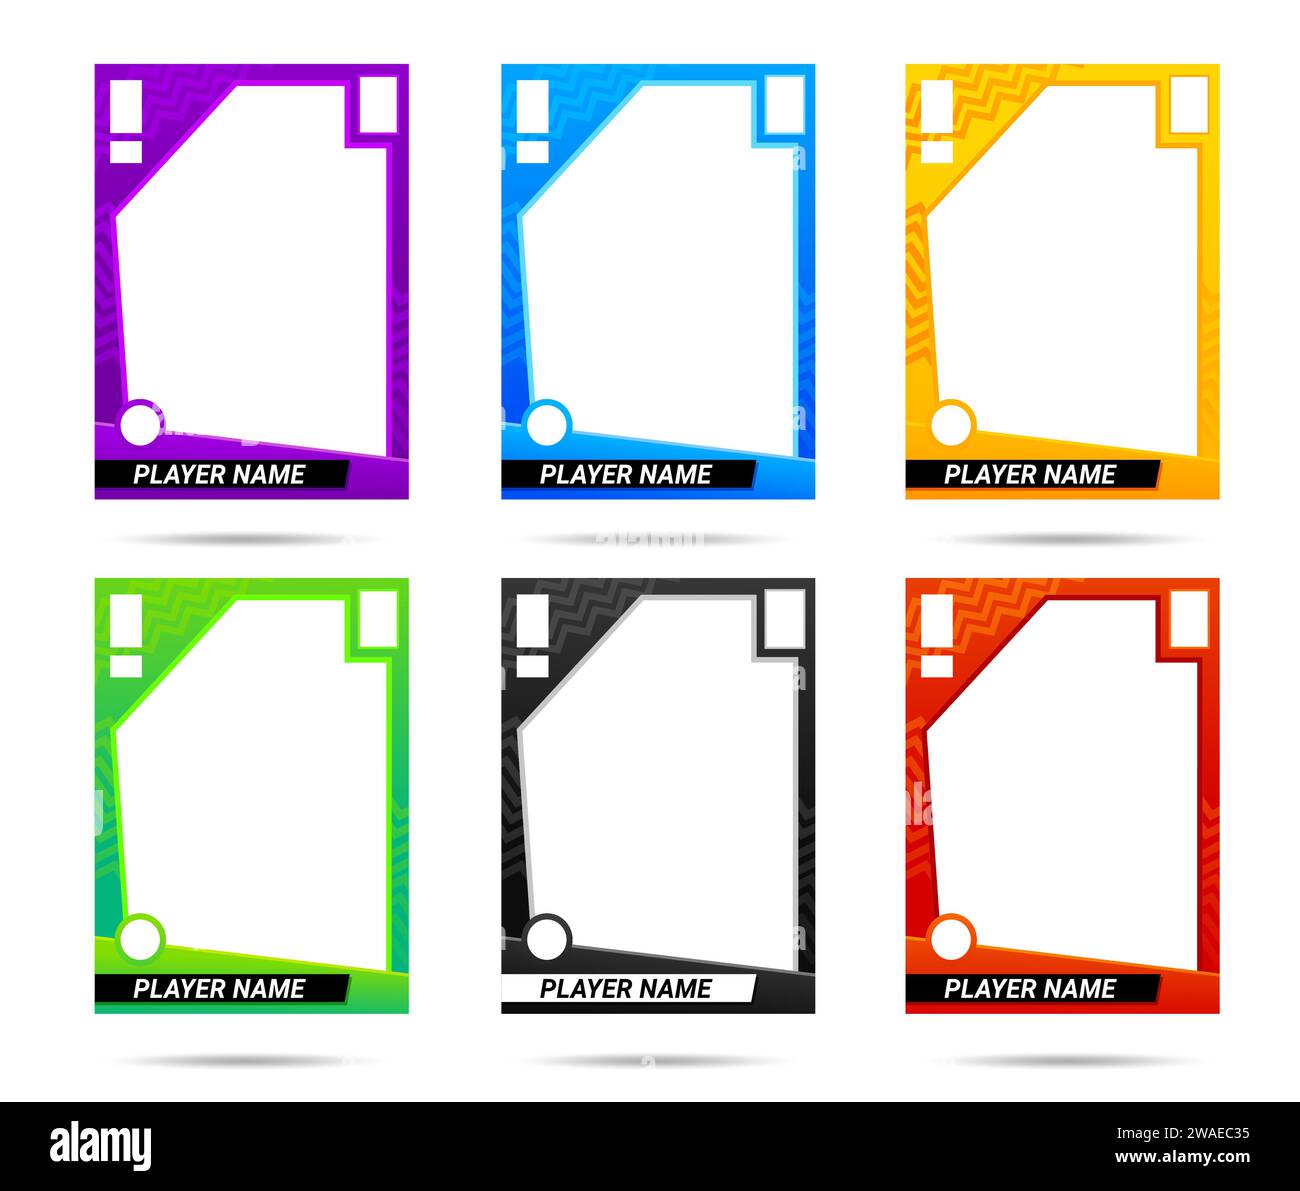 Team player trading card frame border template design flyer Stock